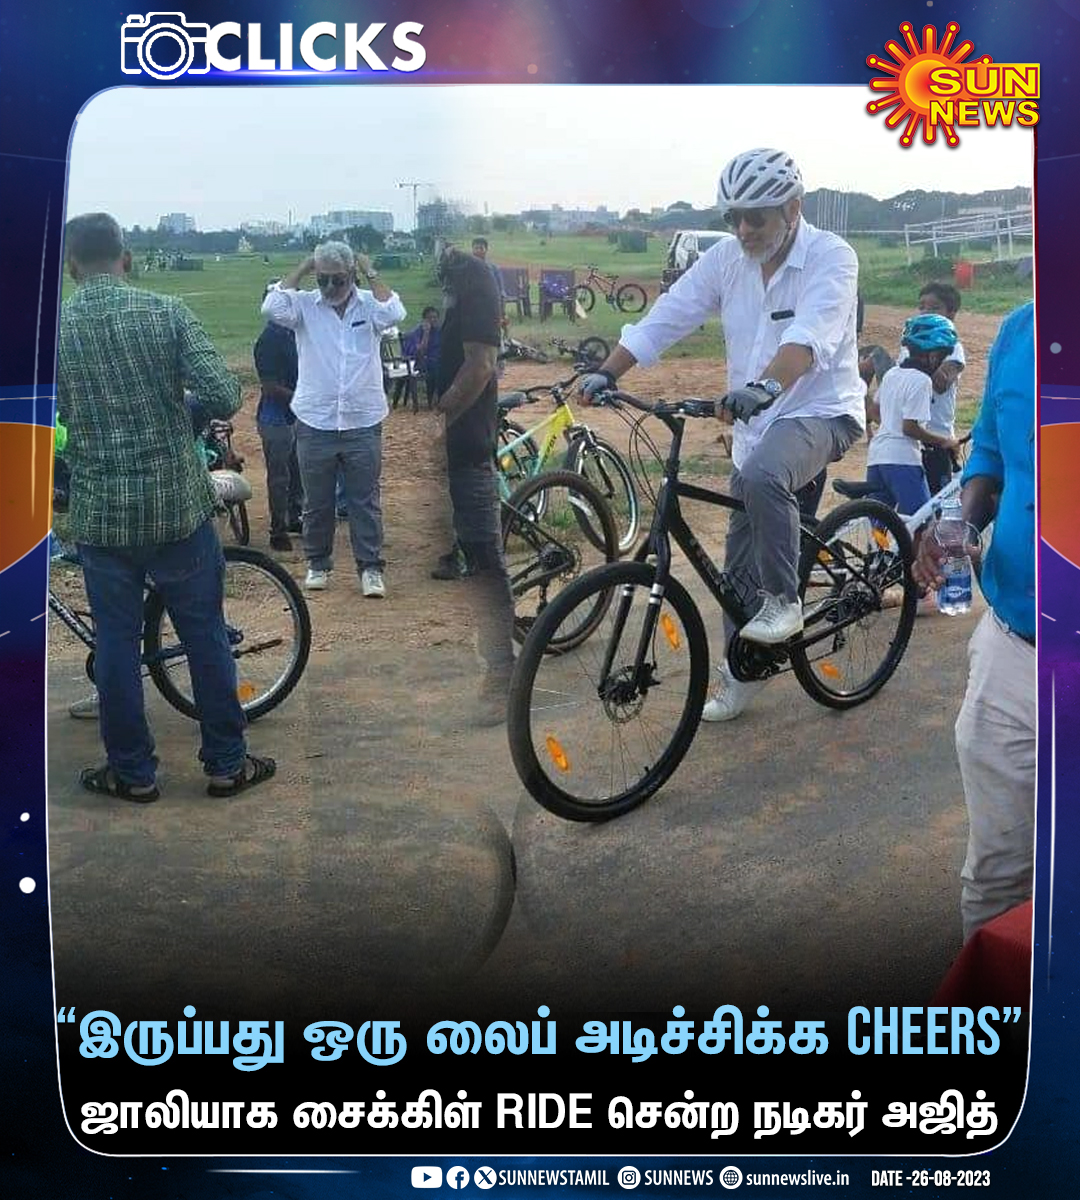 #Clicks | ஜாலியாக சைக்கிள் RIDE சென்ற நடிகர் அஜித்!

#SunNews | #AjithKumar | #CycleRide